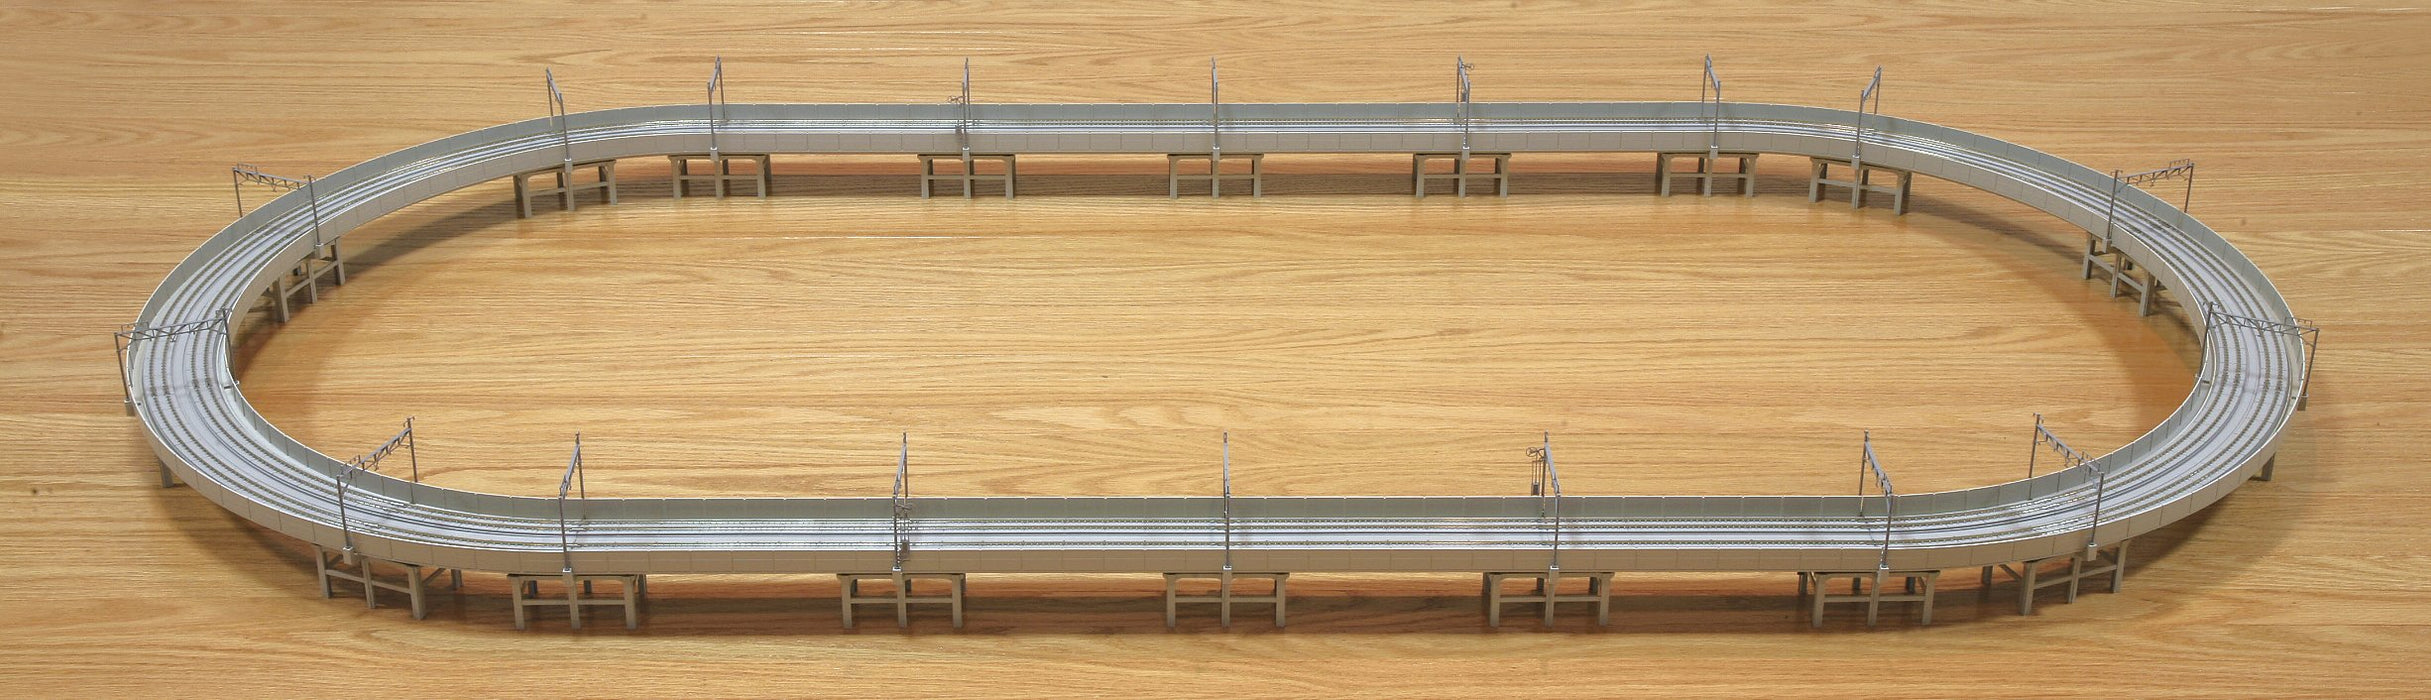 Kato N Gauge V13 Double Track Elevated Track Basic Set (R414/381) 20-872 Railroad Model Rail Set